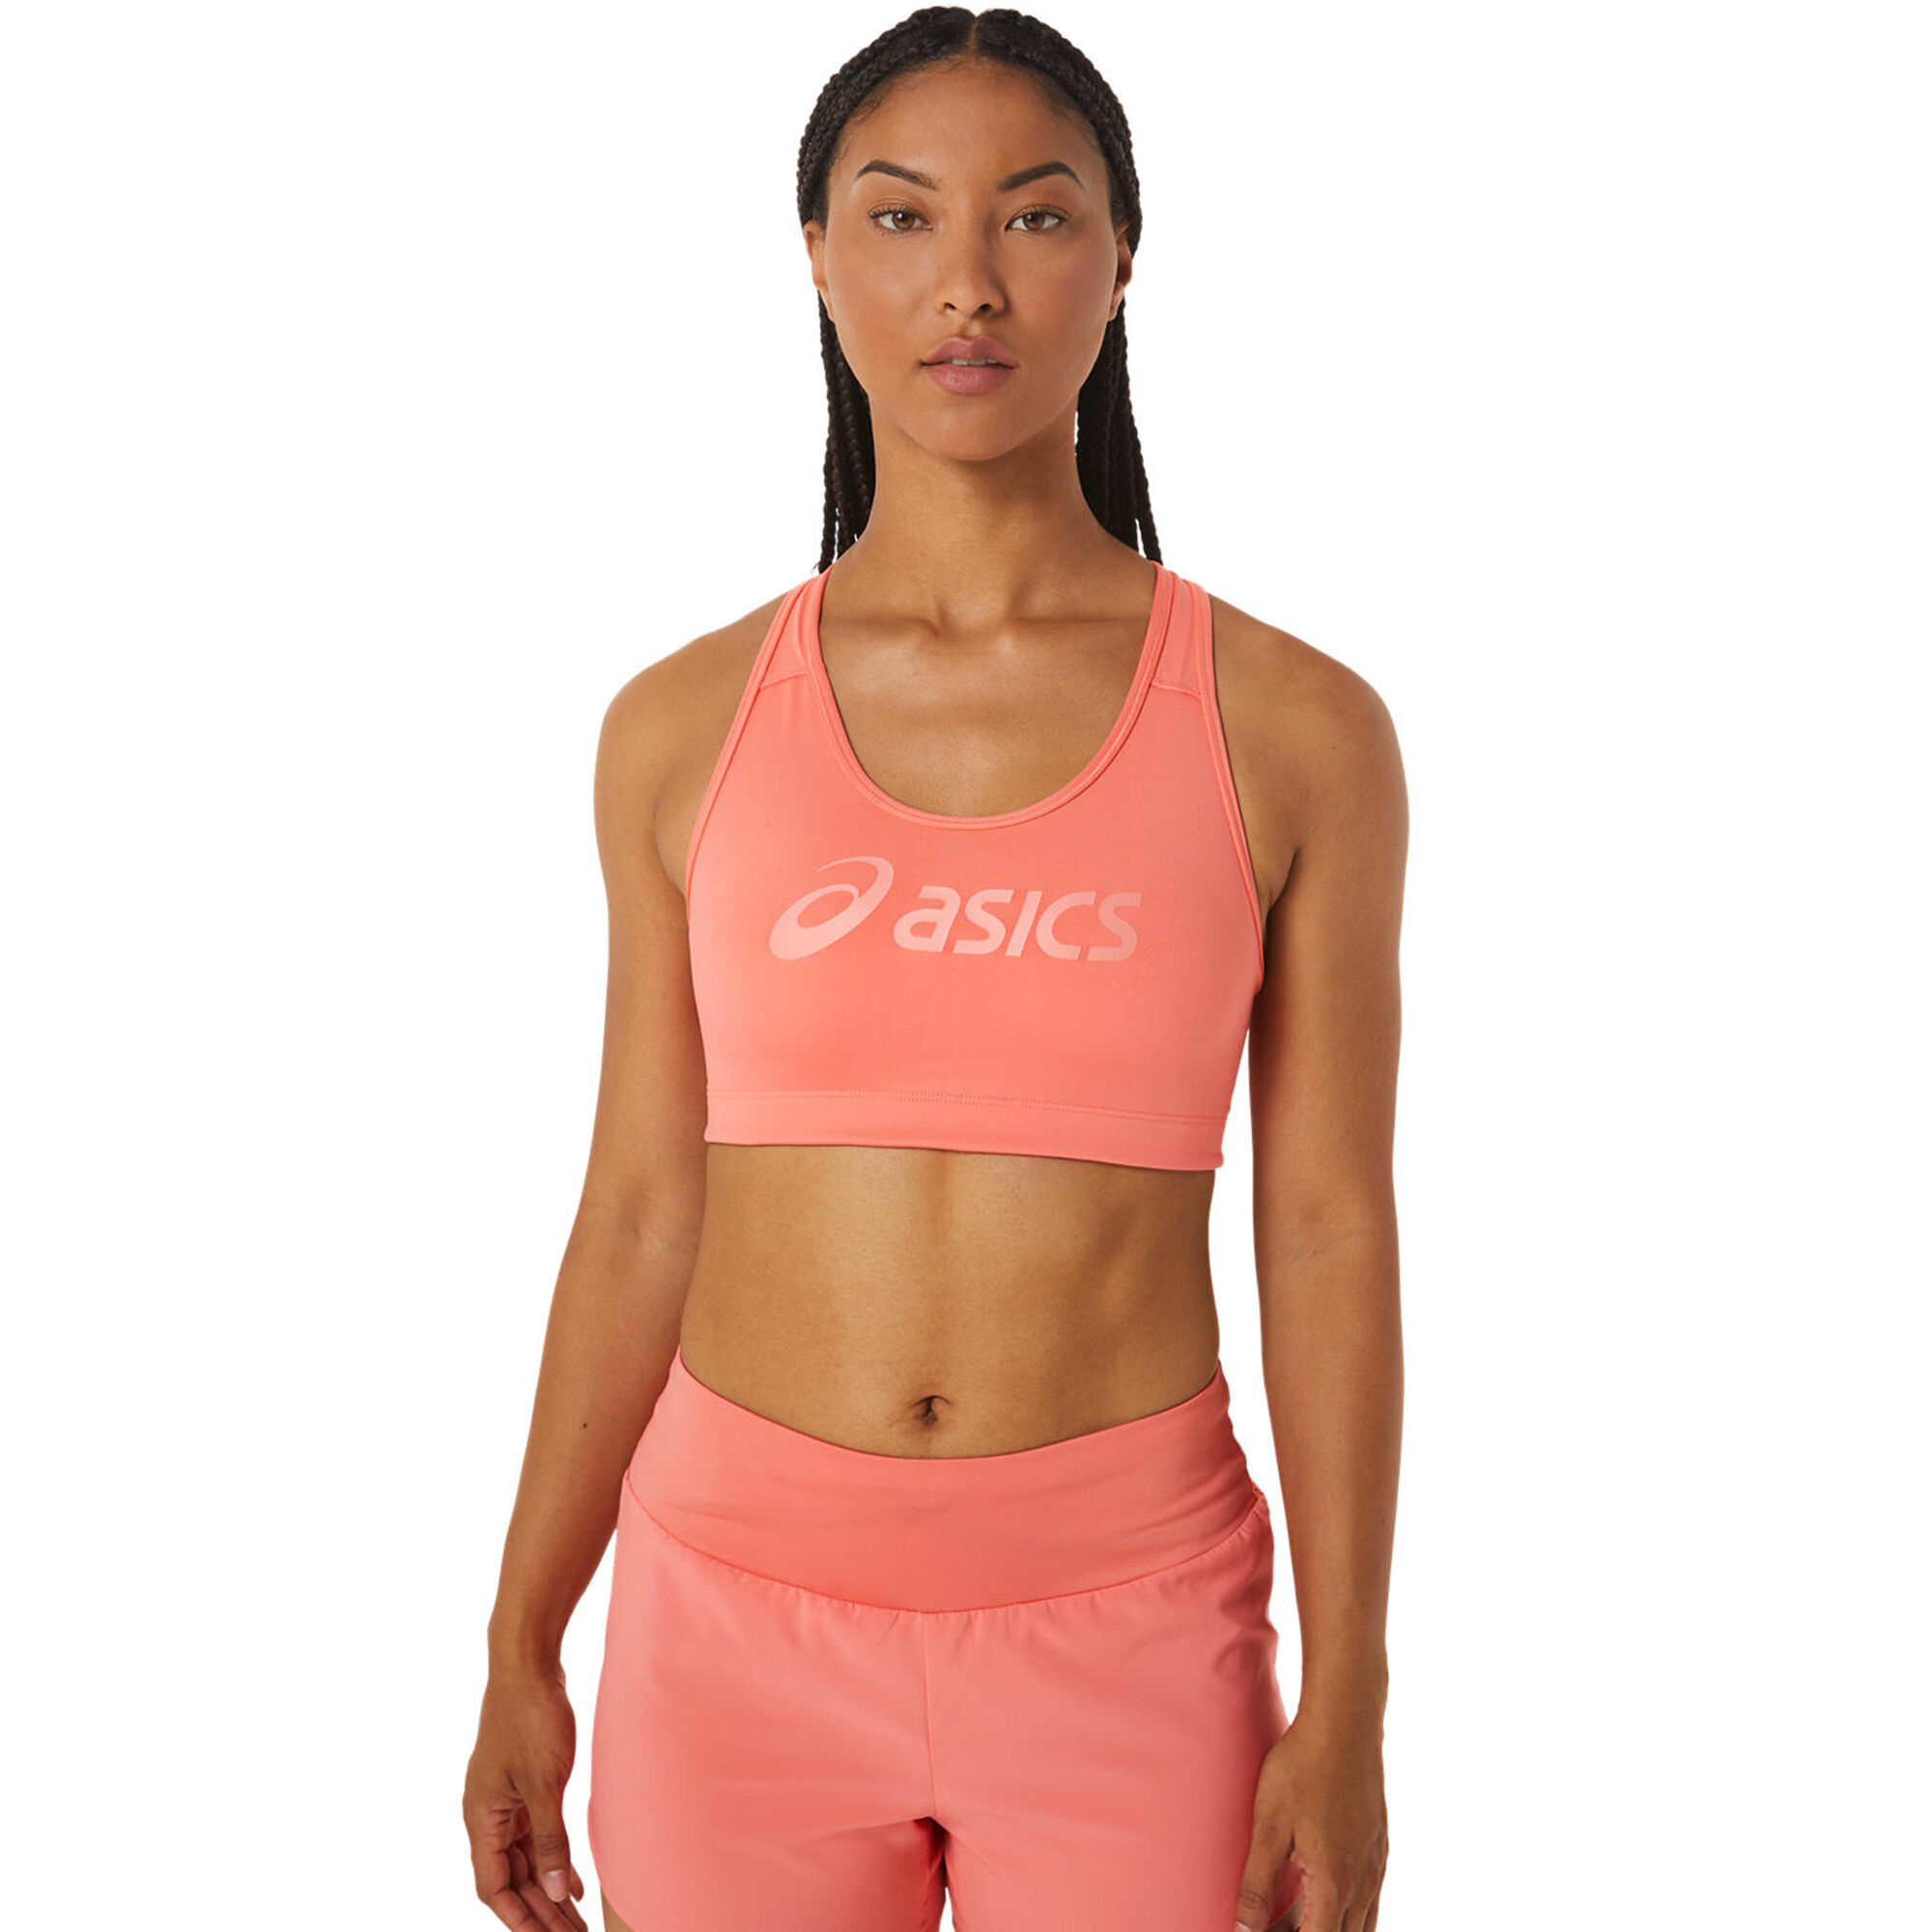 Buy ASICS Core Logo Sports Bras Women Pink online